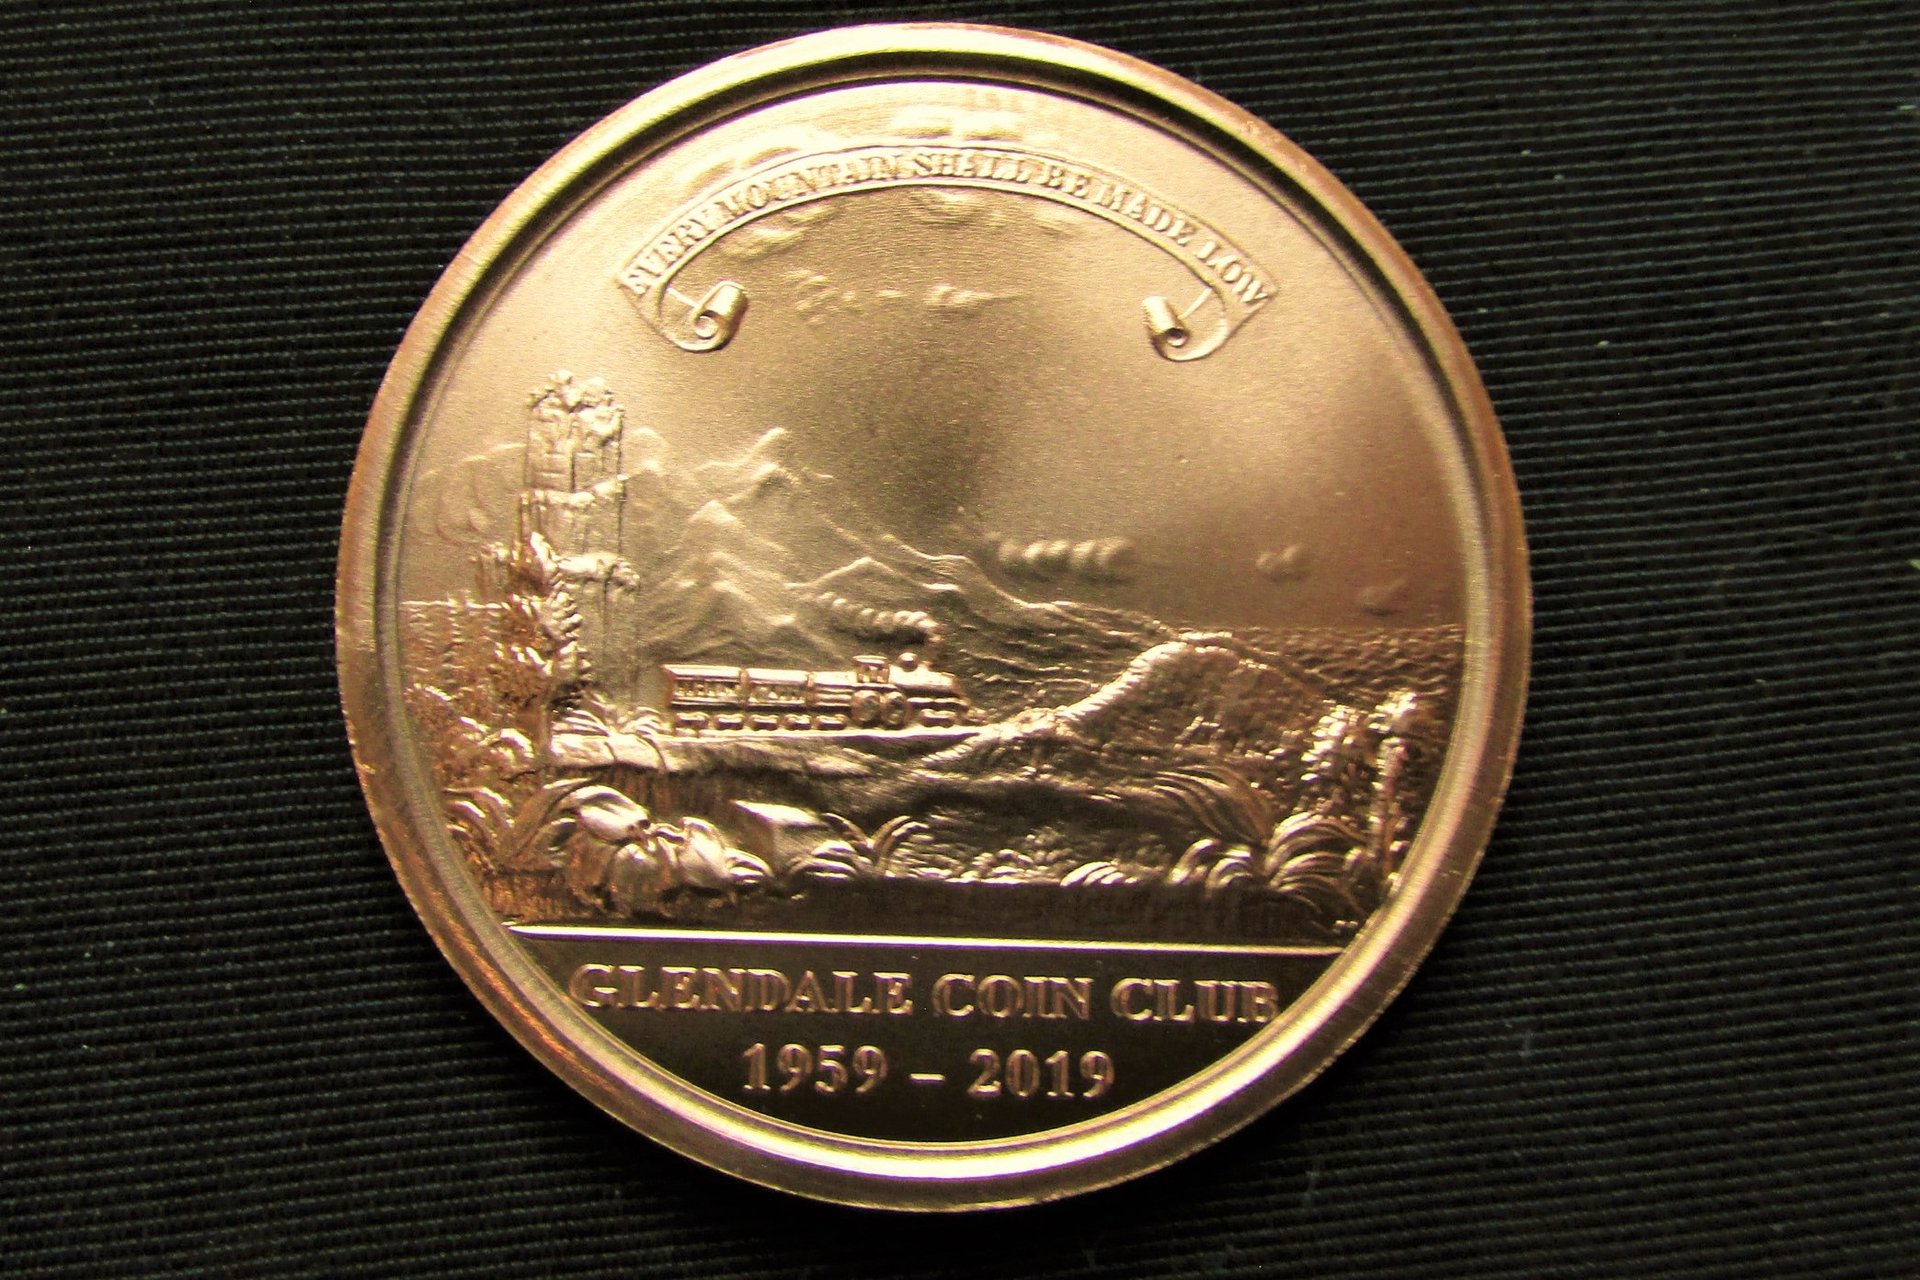 2019 Glendale Coin Club Medal (copper) - obverse.JPG